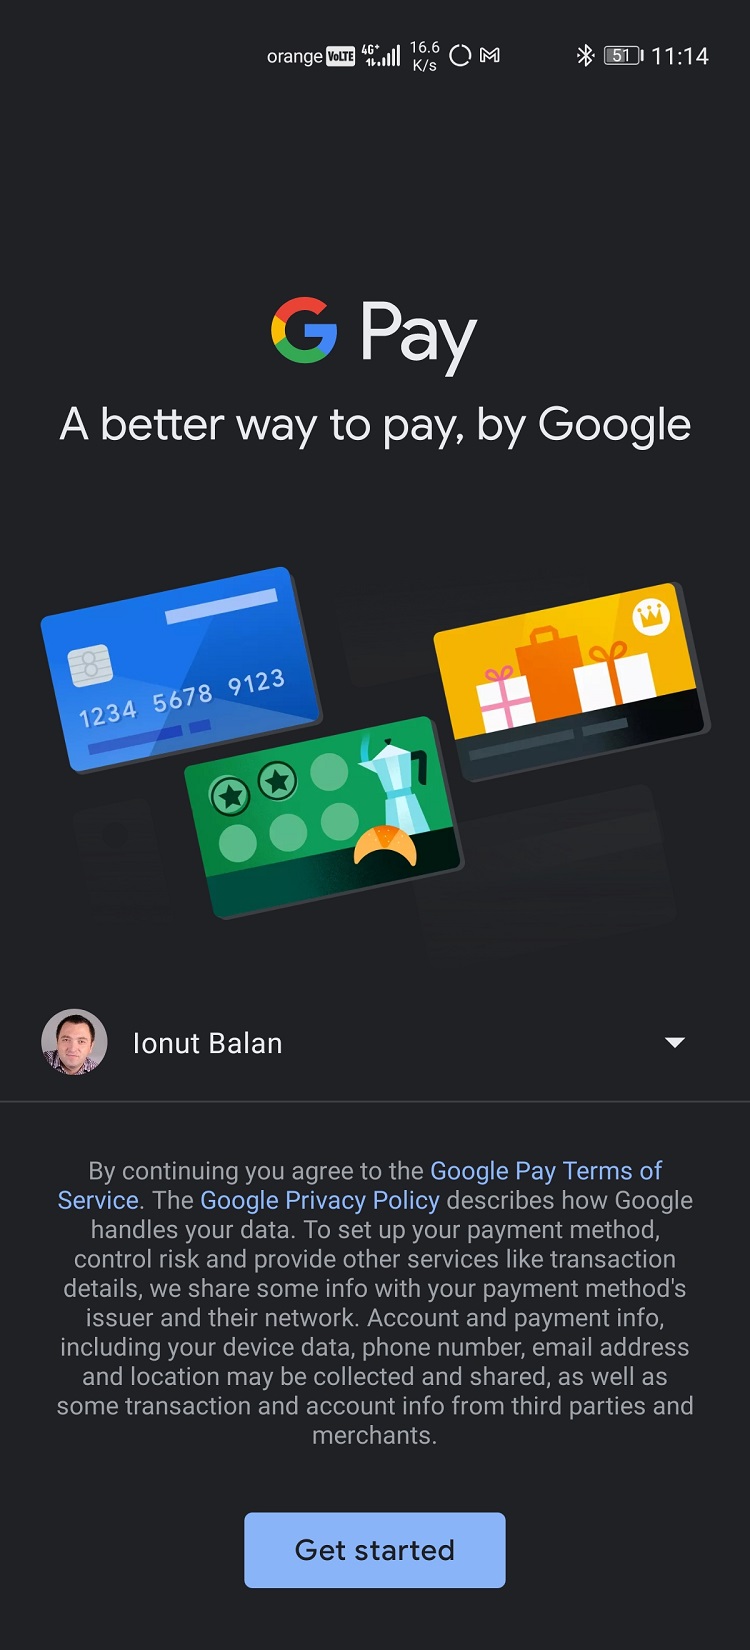 In sfarsit: Google Pay e disponibil in Romania. Afla care sunt cardurile și serviciile compatibile